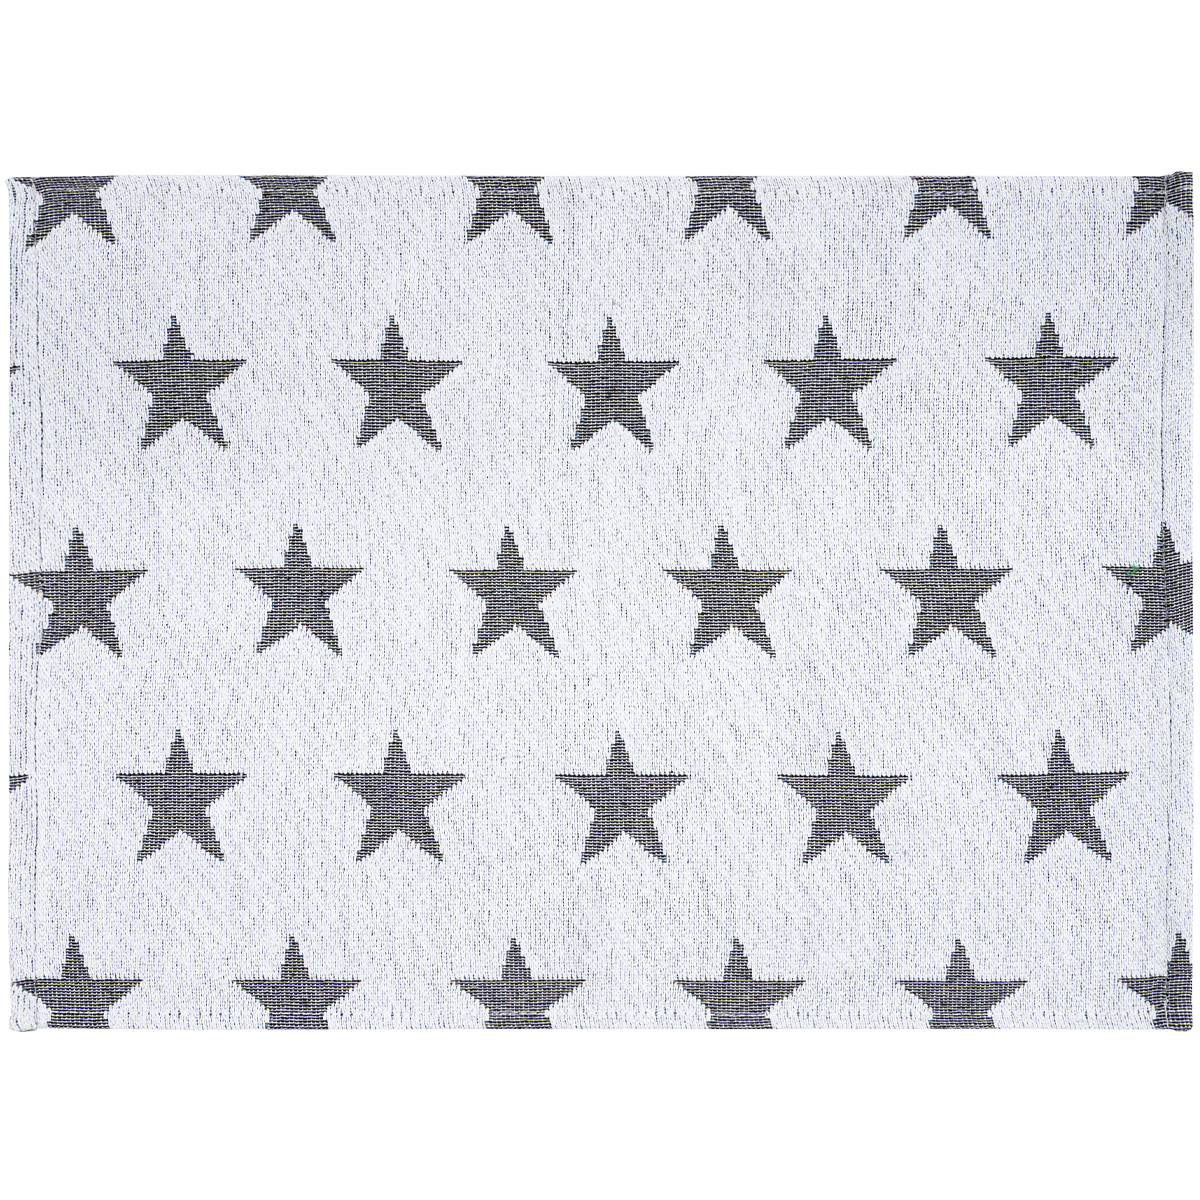 Naproane Stars white, 30 x 45 cm casă